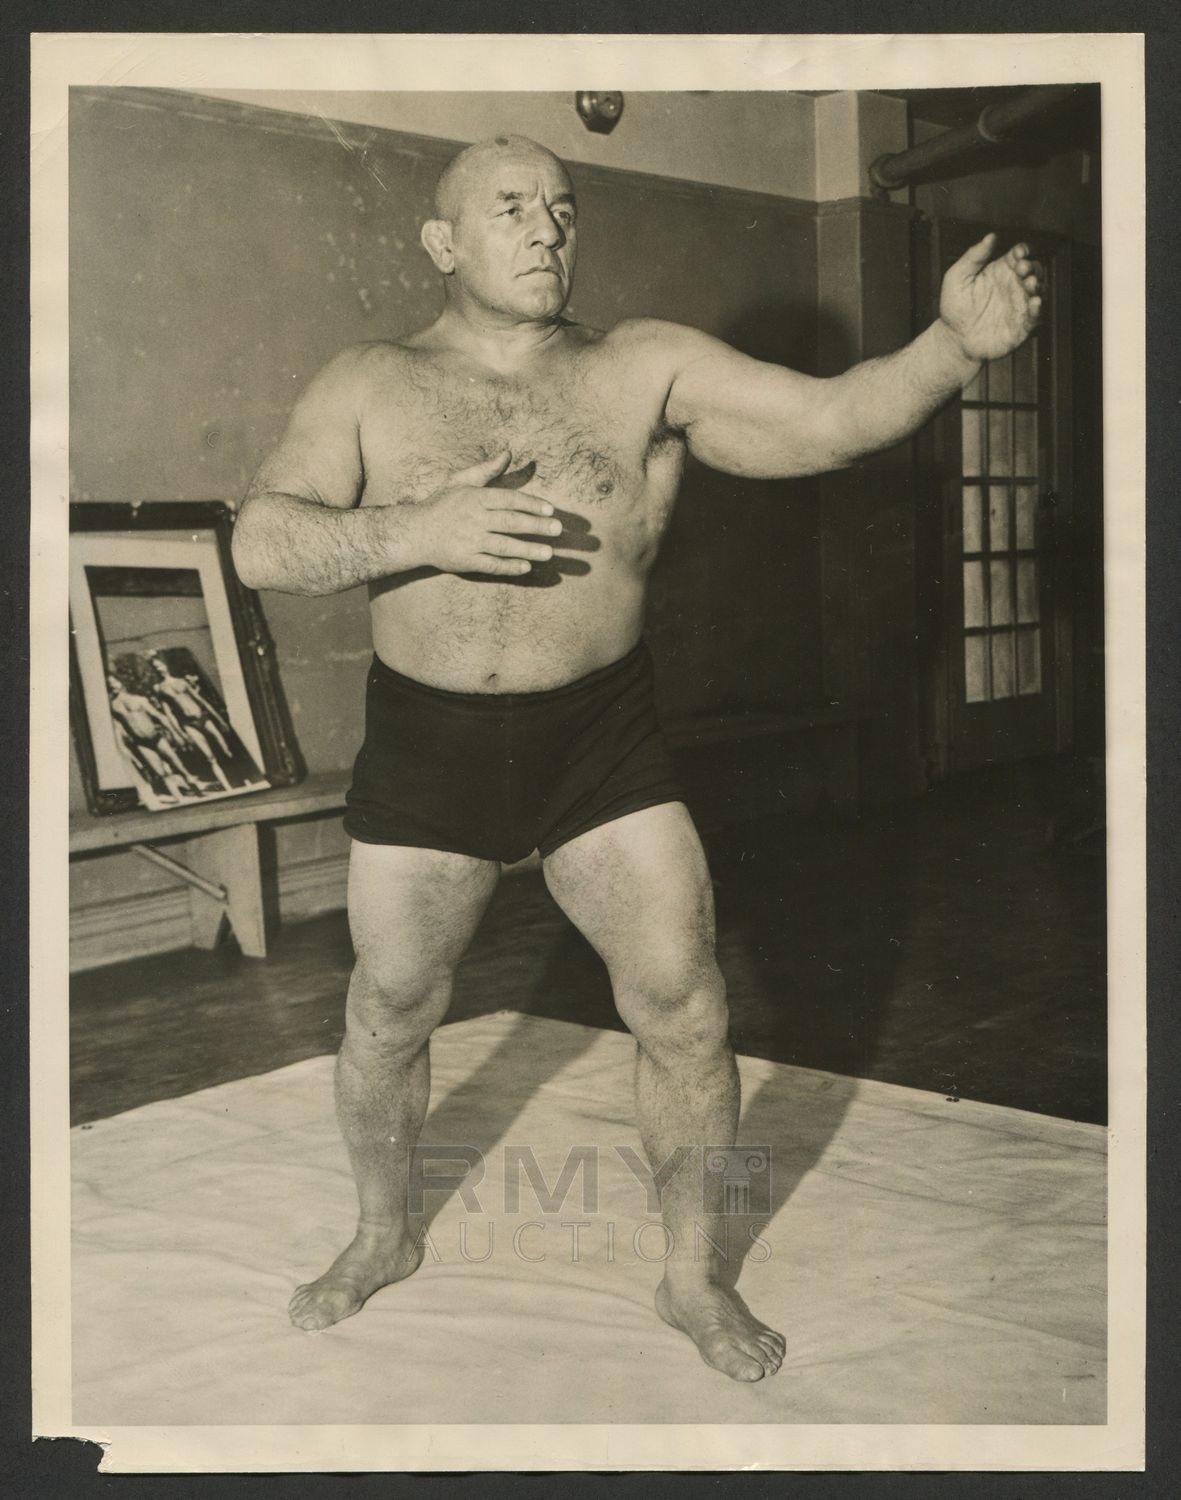 Lot 762 1930 S Stanislaus Zbyszko Iconic Polish Strongman And Wrestler Rare Photo